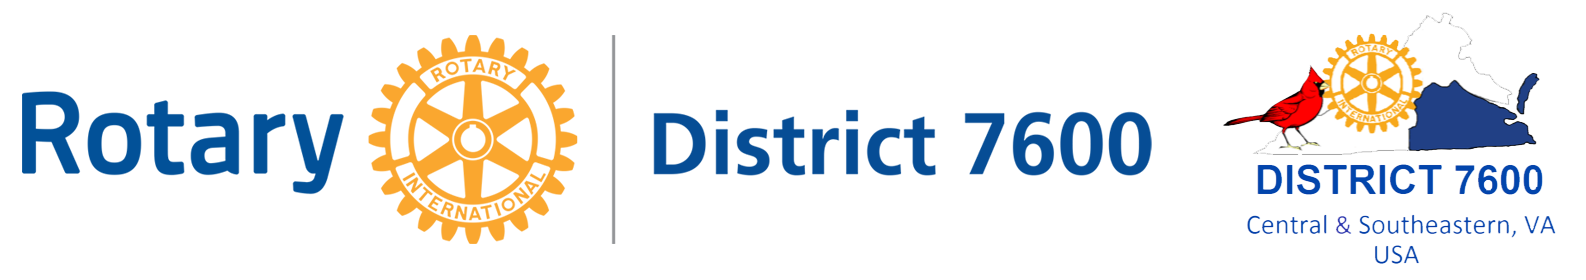 District 7600